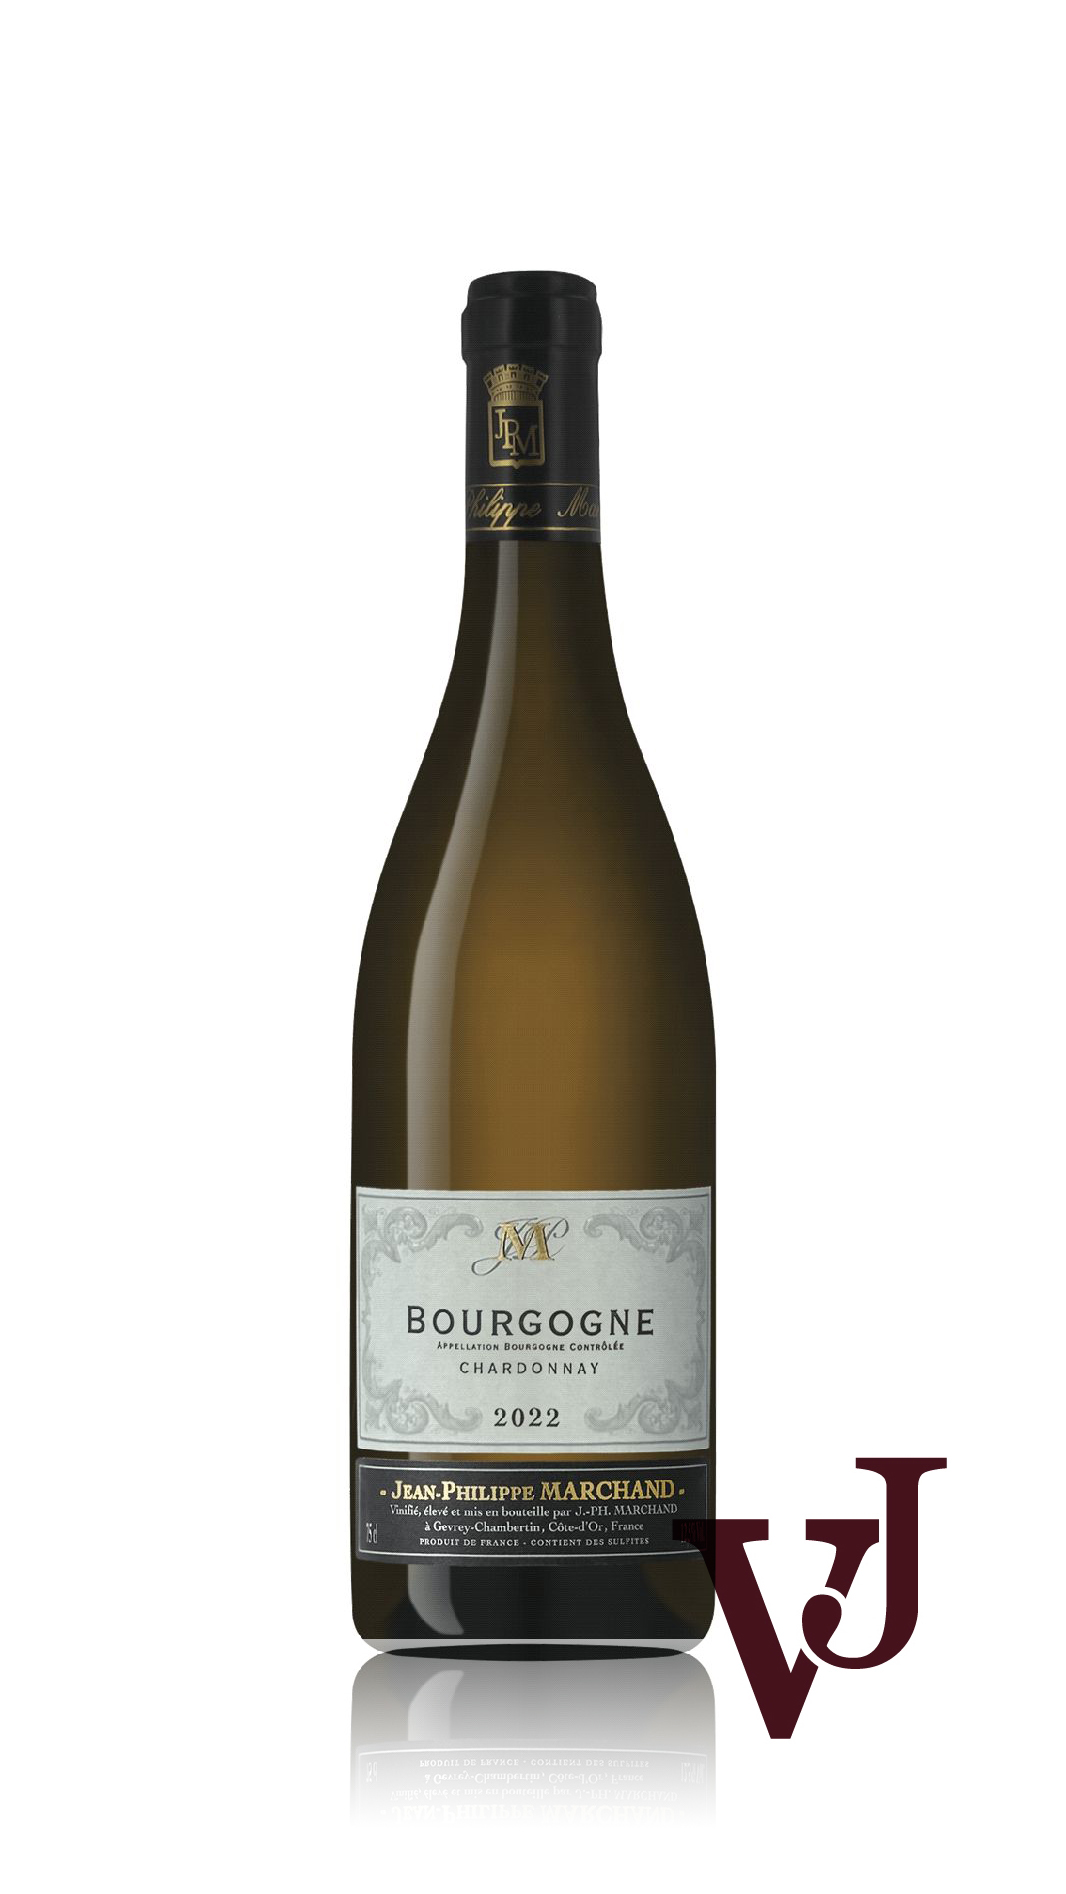 Vitt Vin - Jean-Philippe Marchand Bourgogne Chardonnay 2022 artikel nummer 5663701 från producenten Jean-Philippe Marchand från området